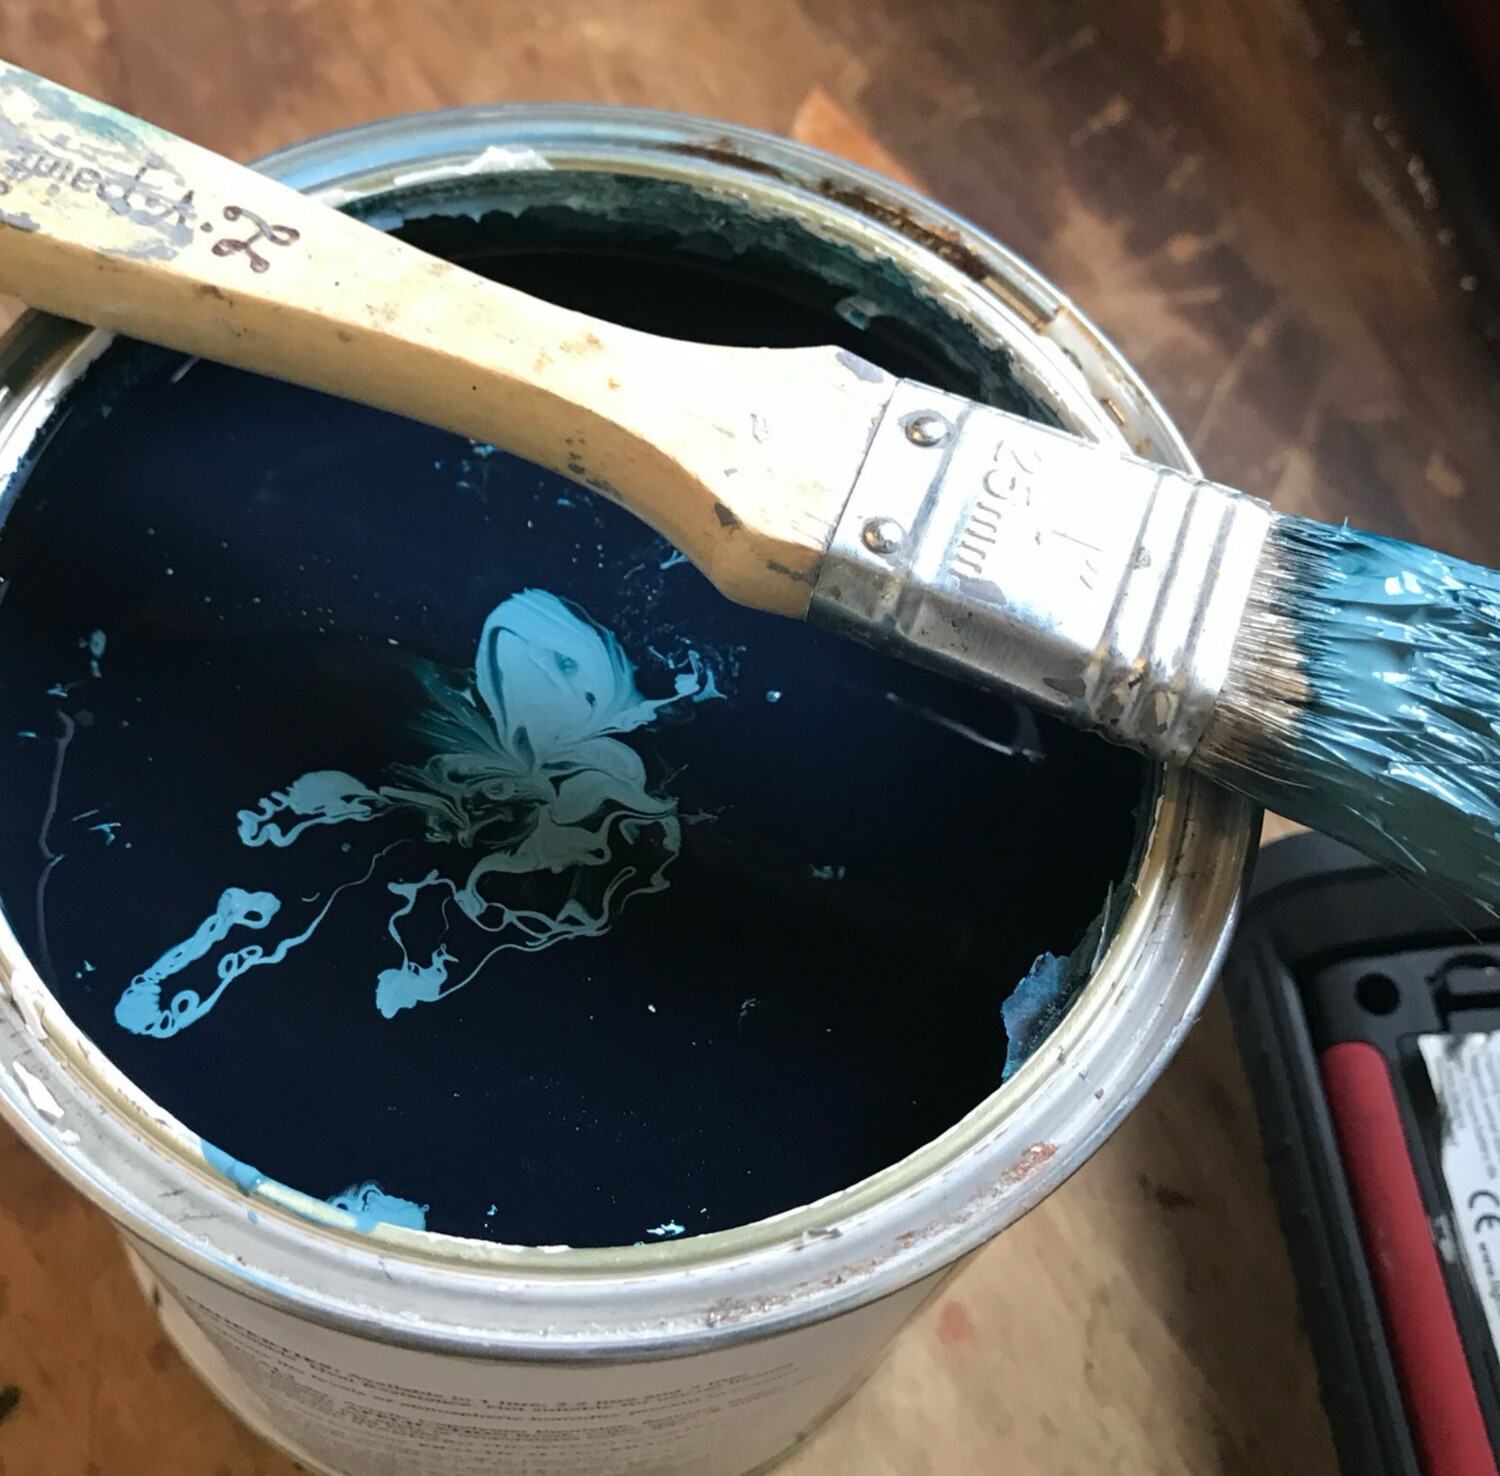 Beginner’s Paint Course